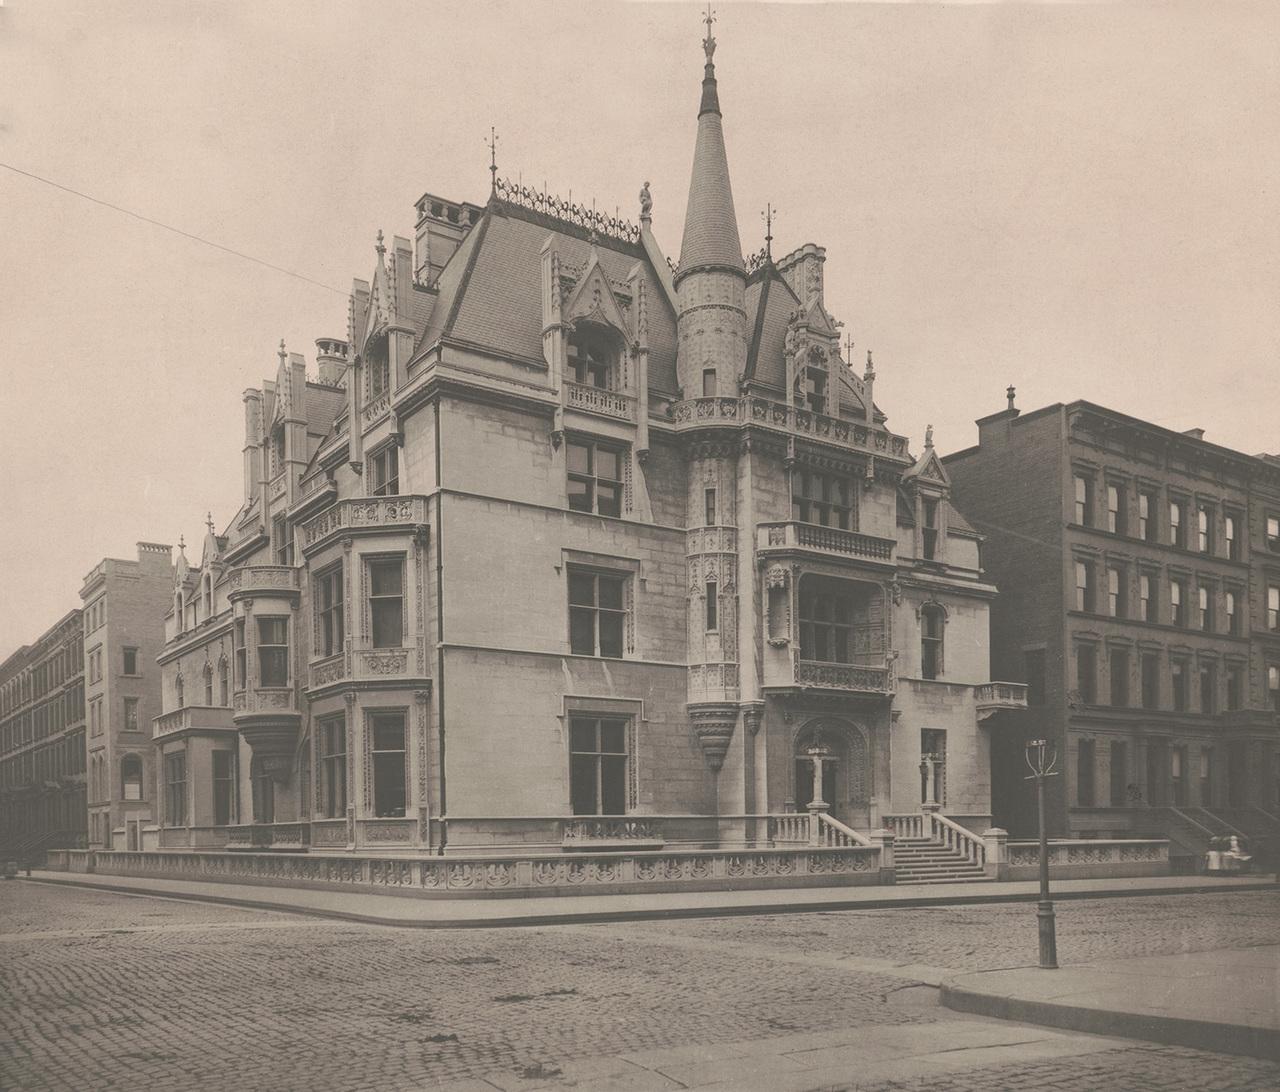 The Vanderbilt Mansion - NYC in 1885